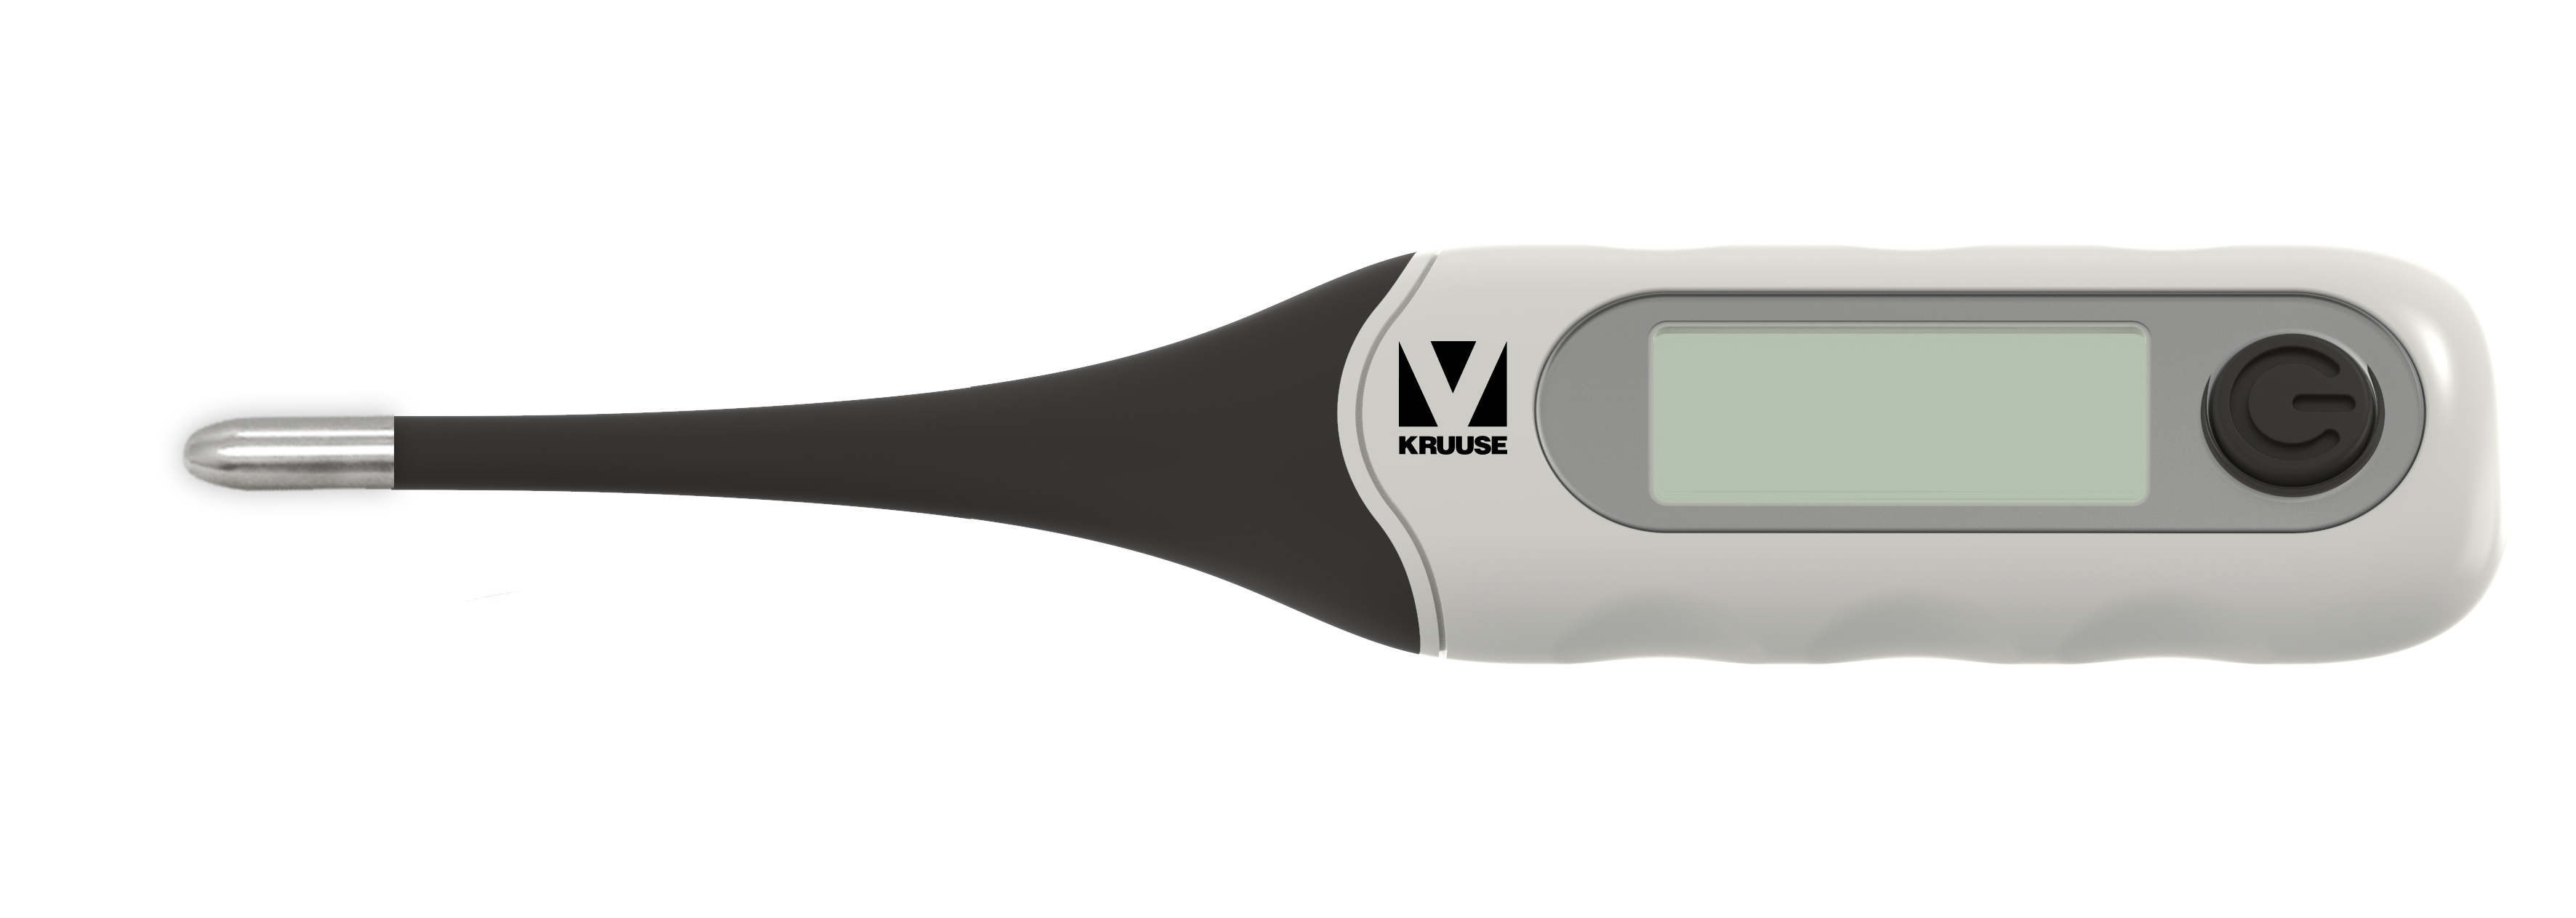 KRUUSE Premium Digital Thermometer with Flexible tip
